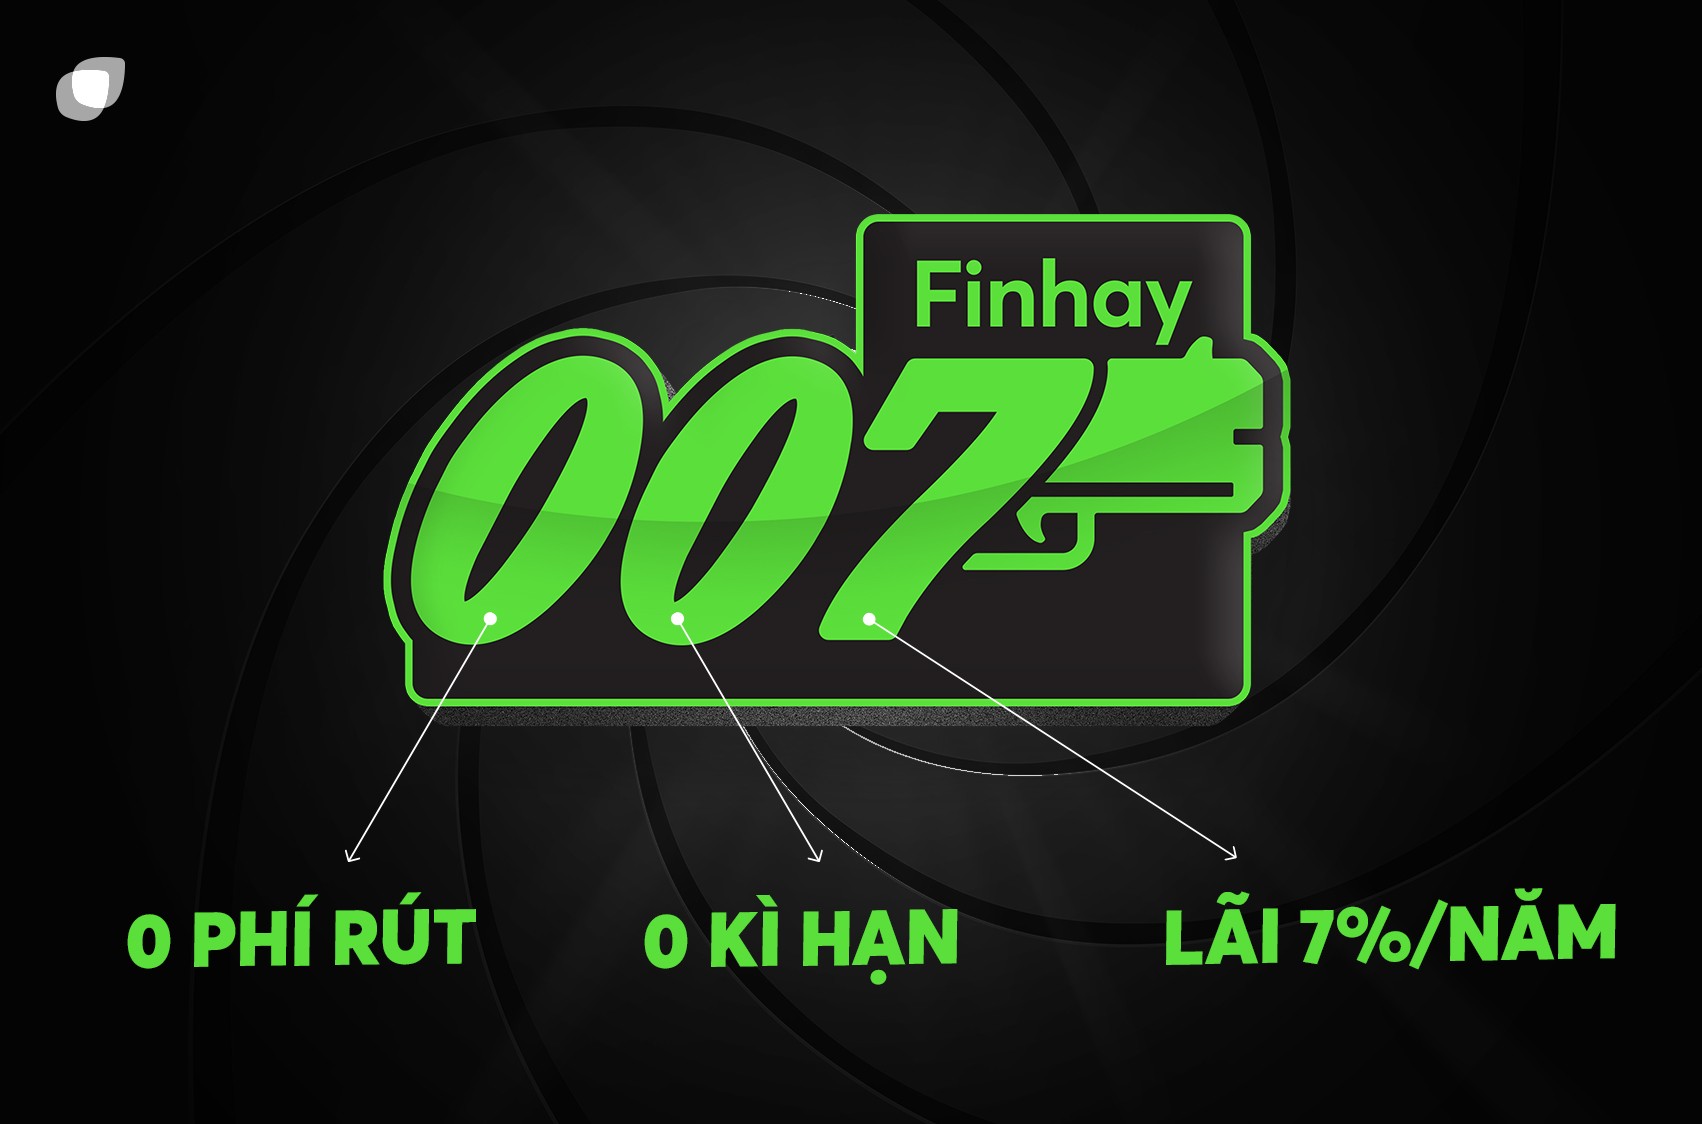 finhay 007